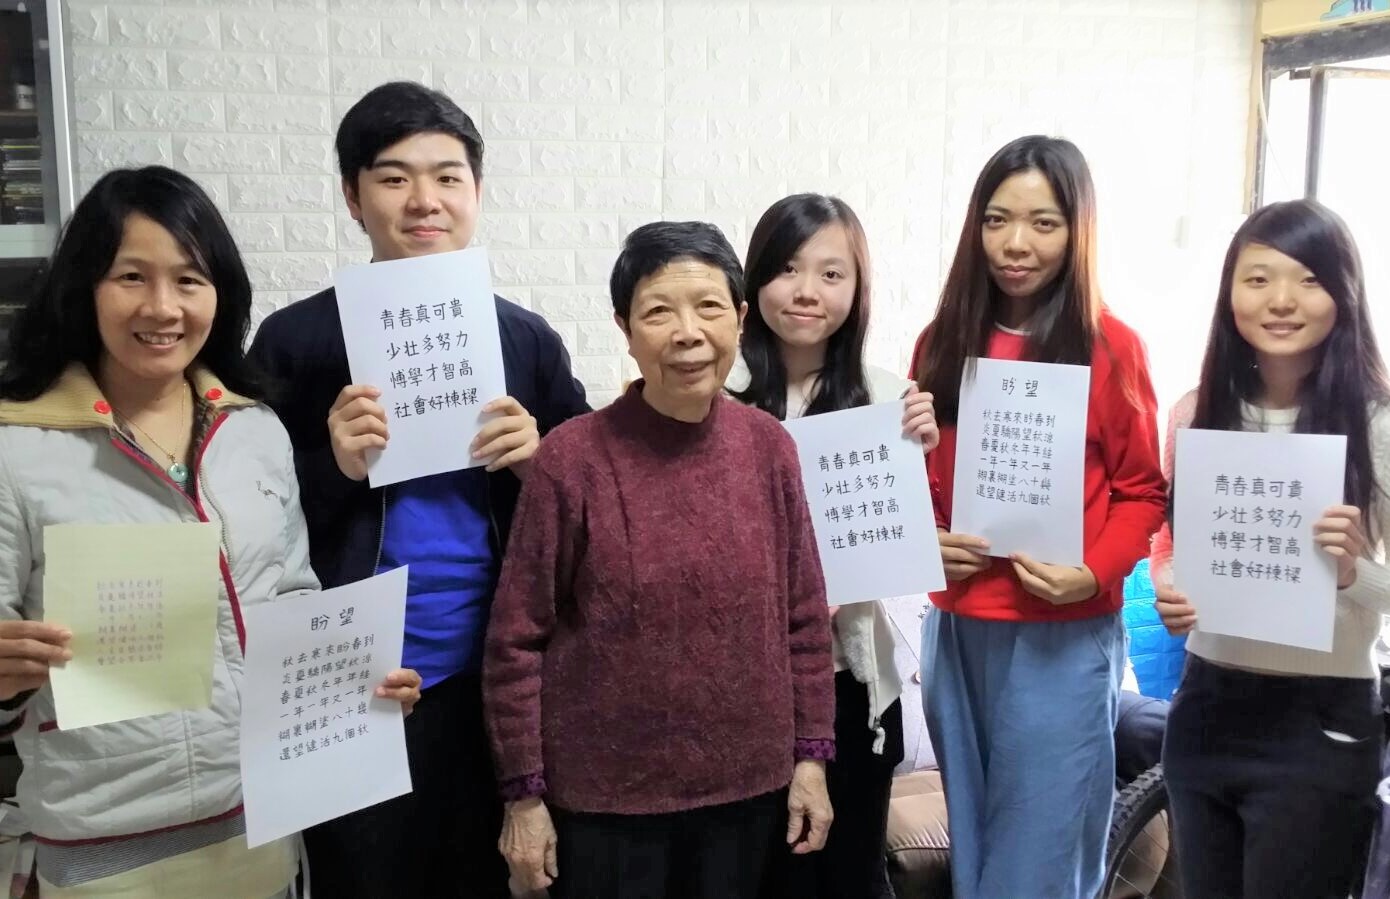 Home visit of elderly by nursing students